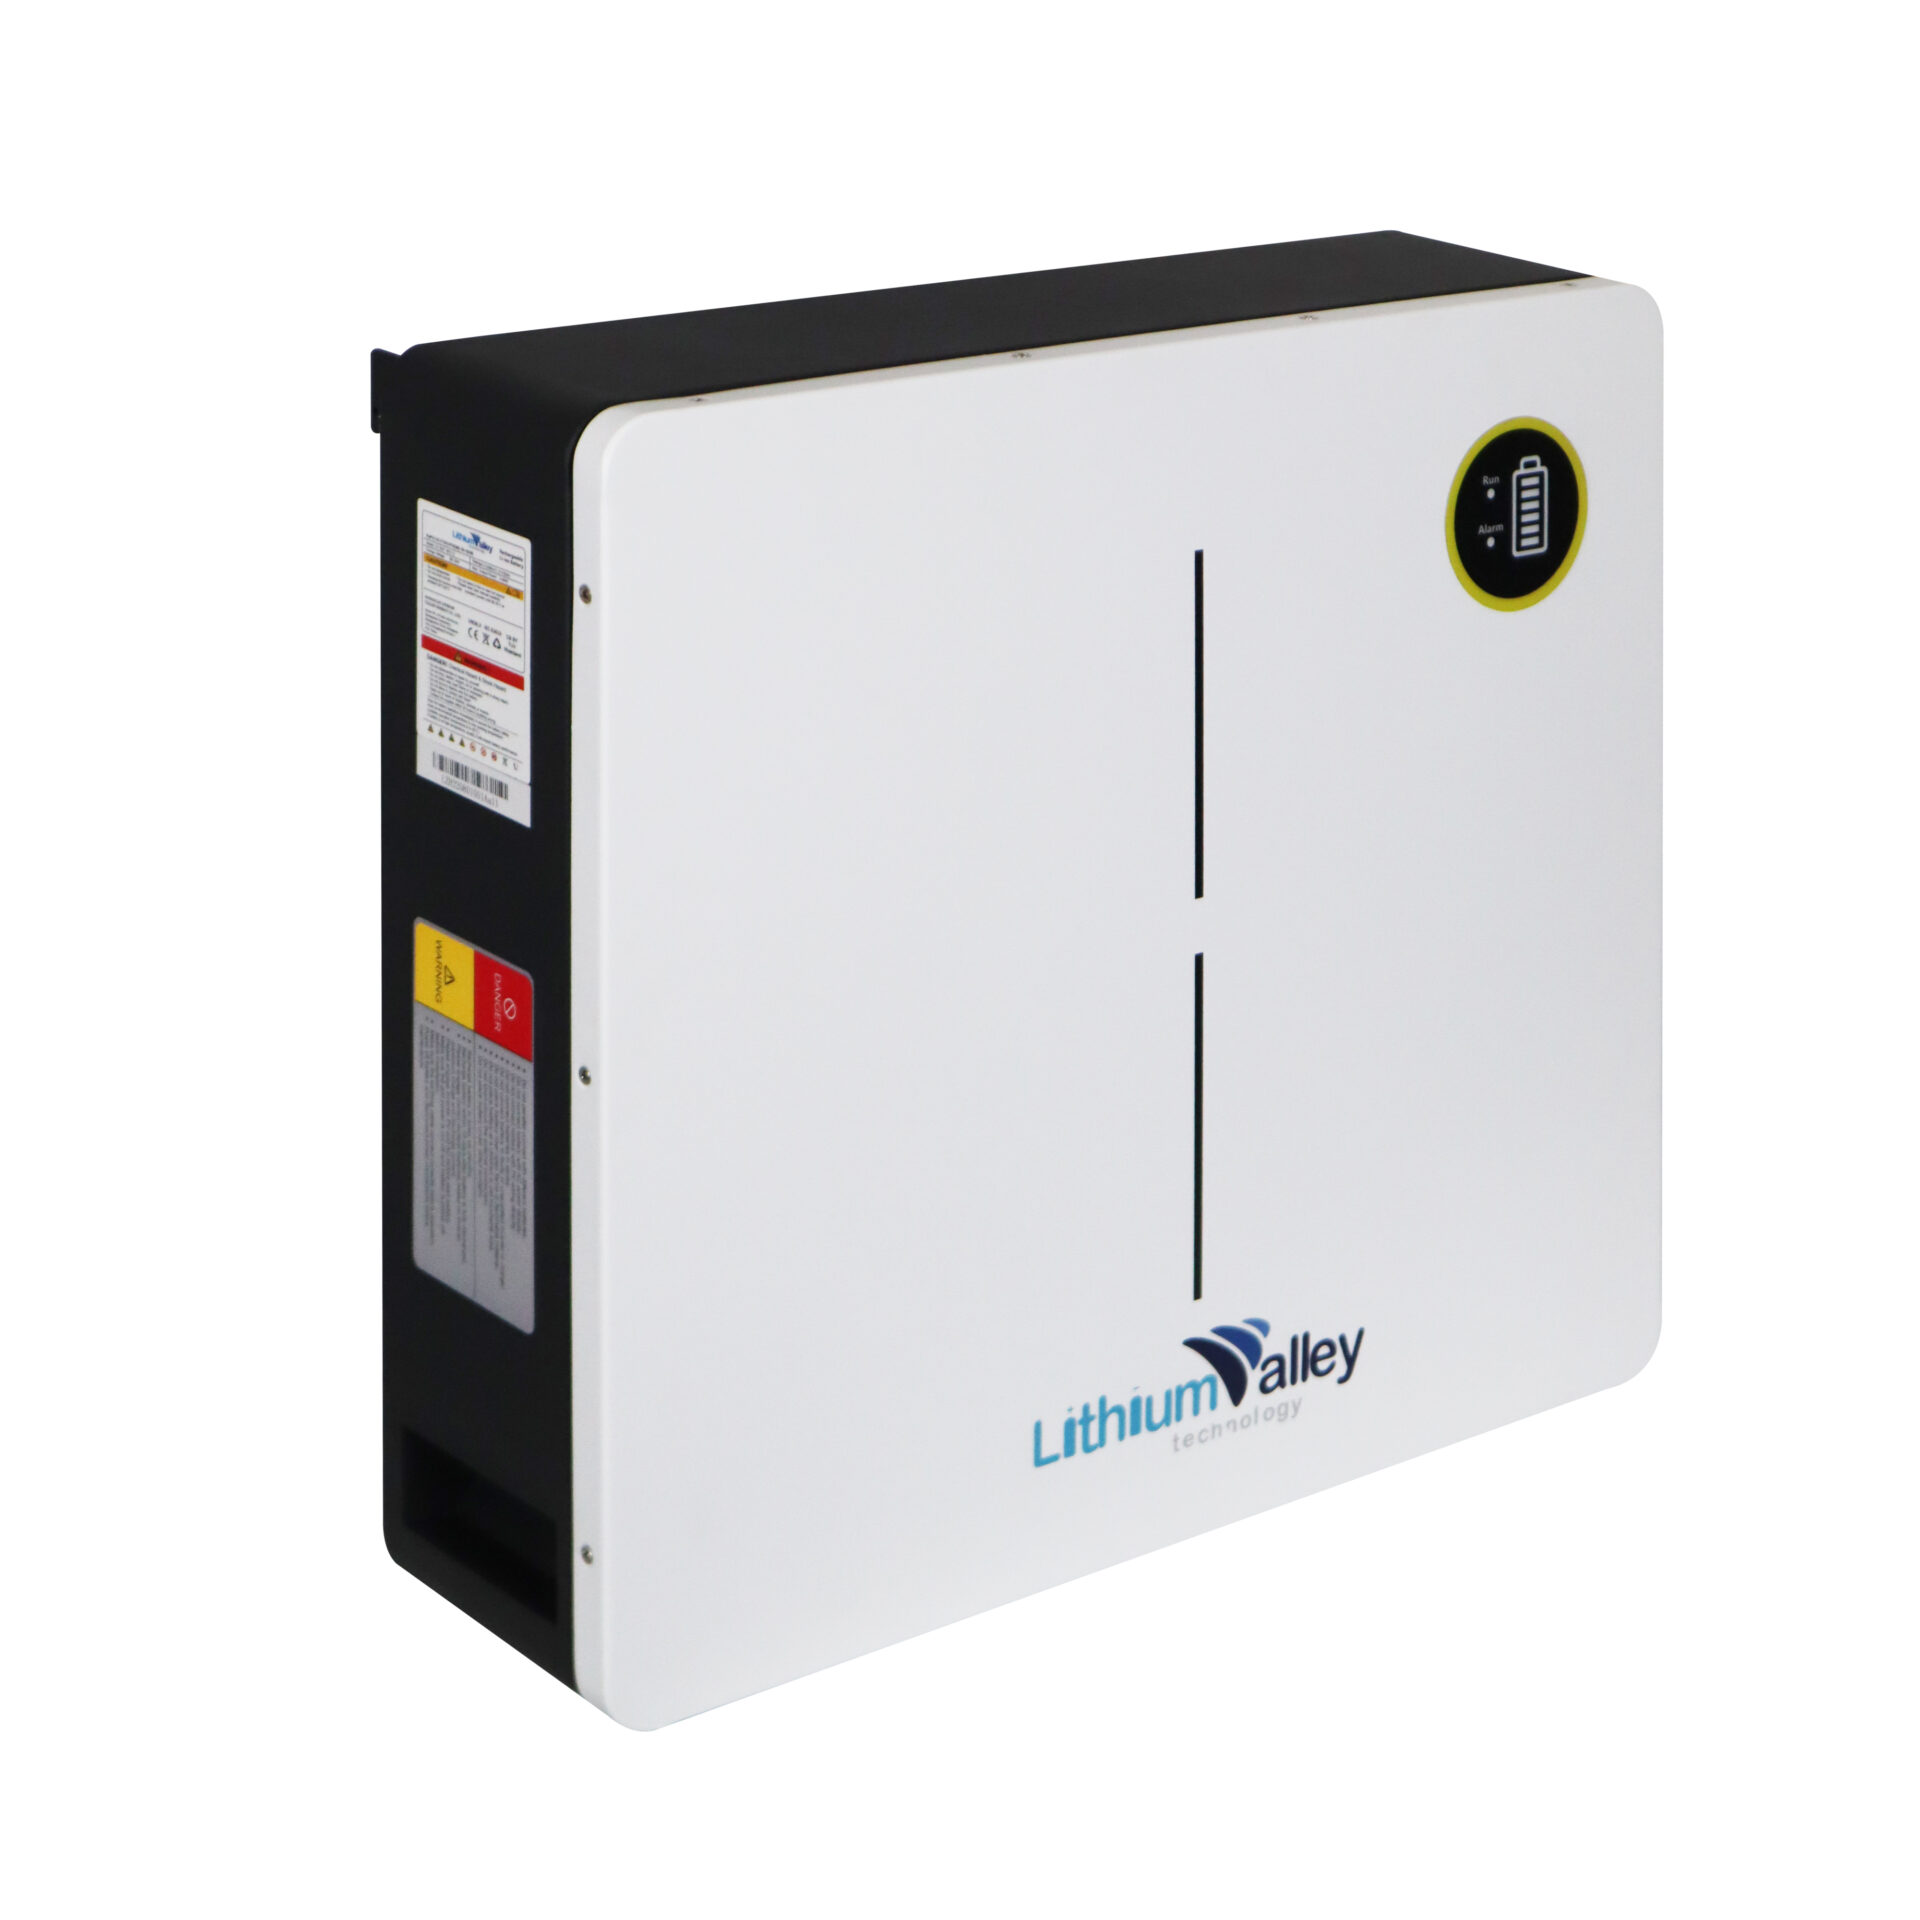 48V 100Ah Lithium Battery for Solar Energy Storage - MANLY